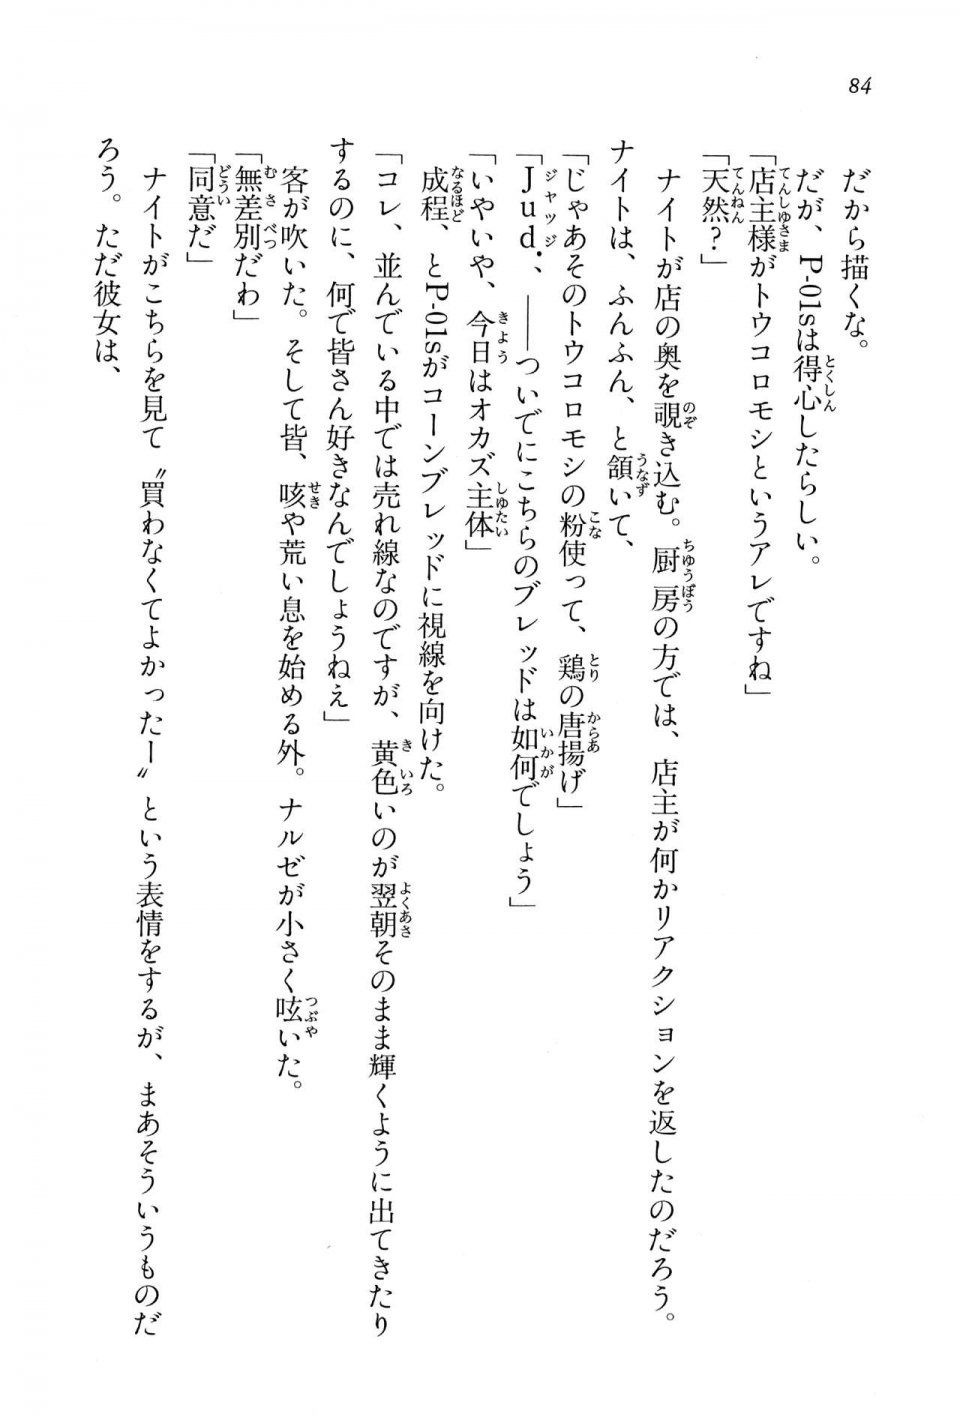 Kyoukai Senjou no Horizon BD Special Mininovel Vol 6(3B) - Photo #88